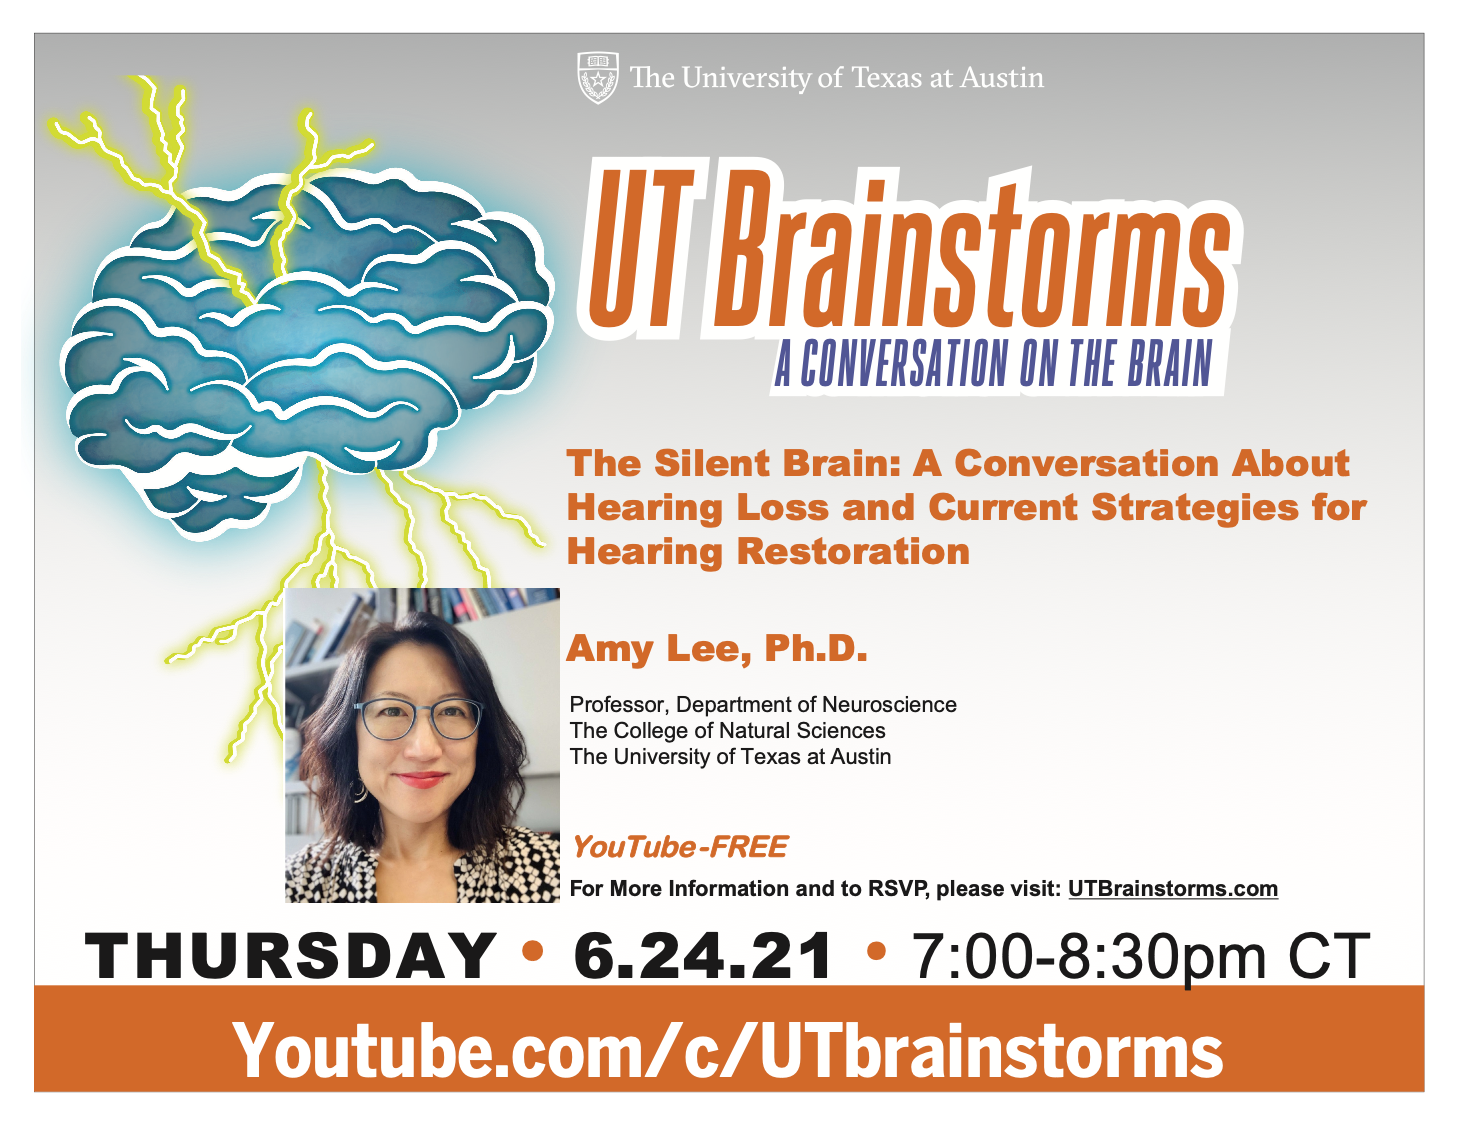 UT Brainstorms: A Conversation on the Brain (Virtual), Austin, Texas, United States